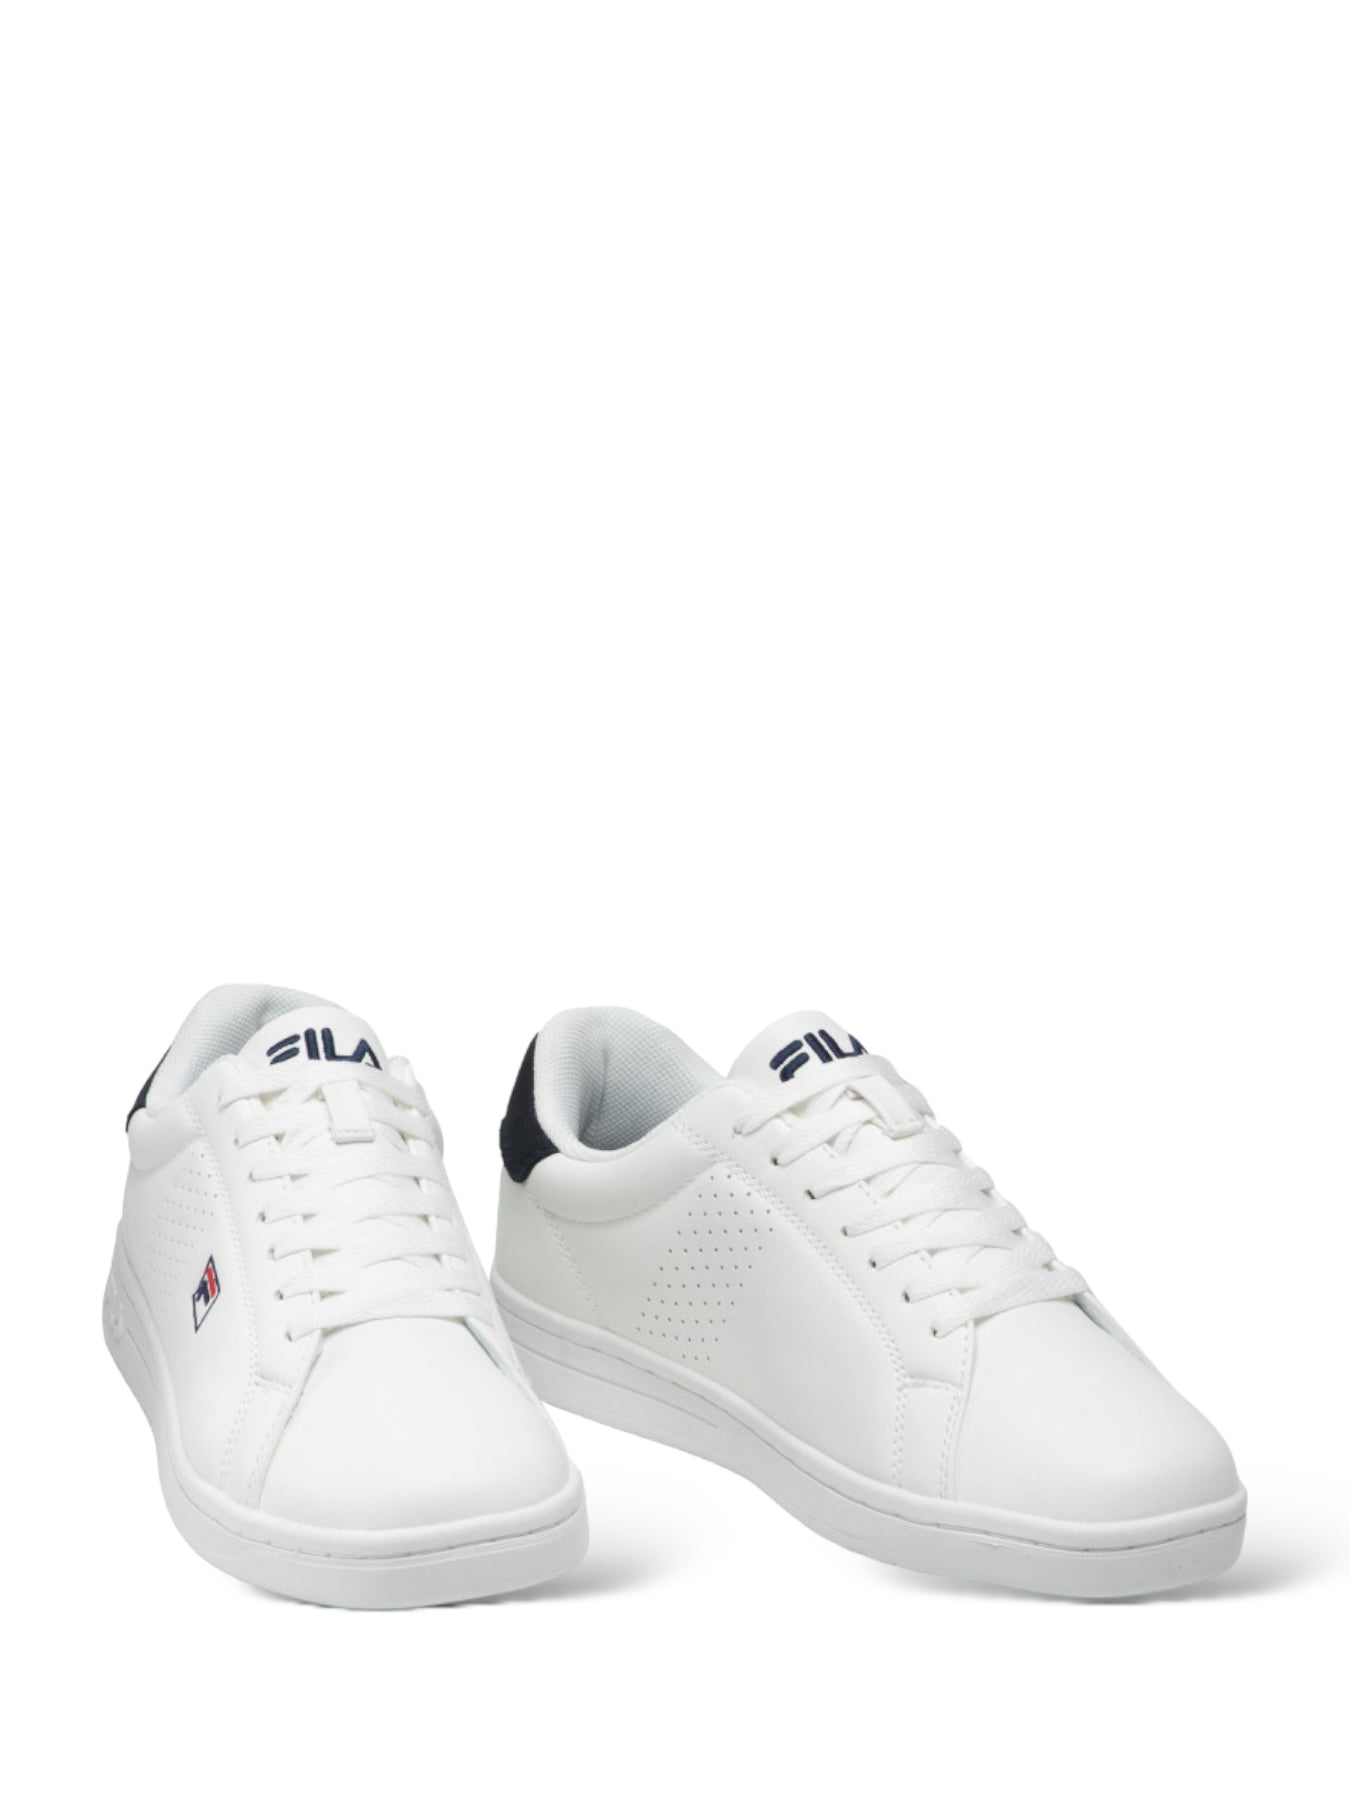 Fila Sneakers Ffm0002 White